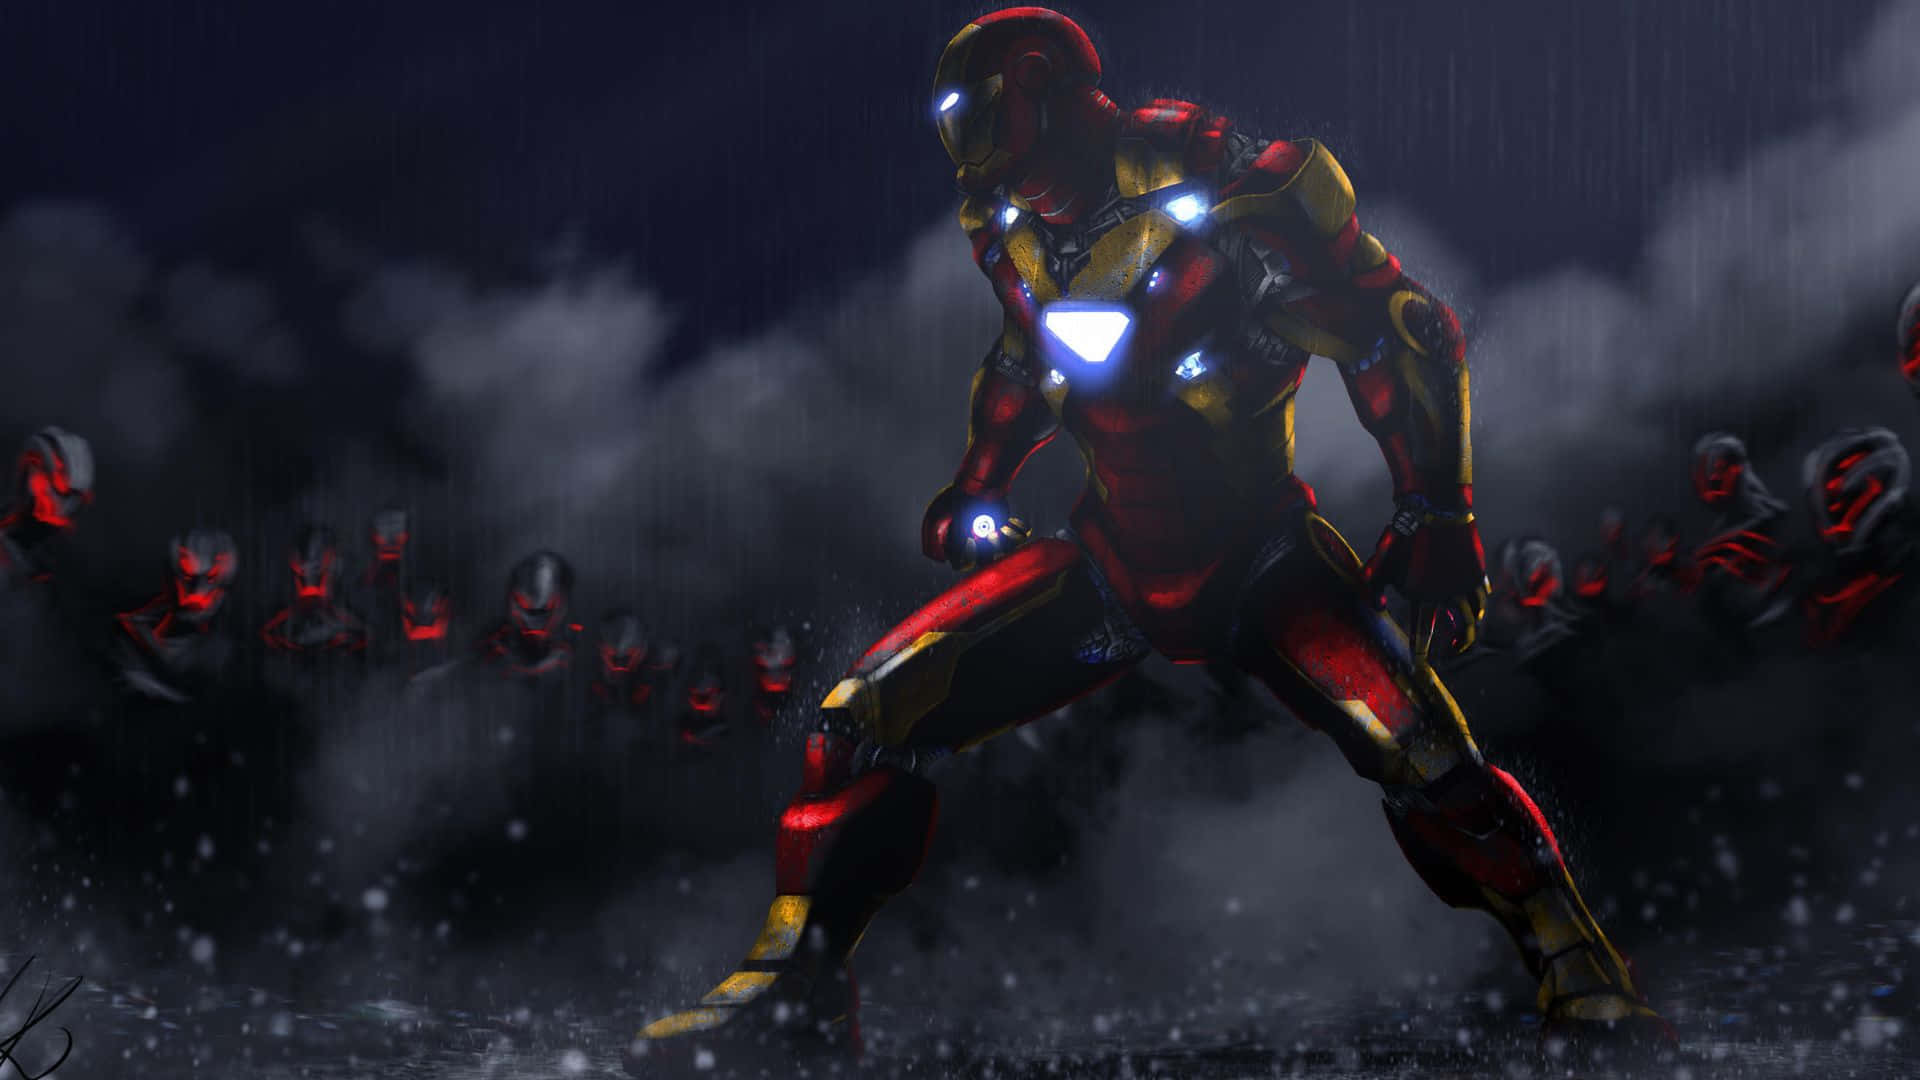 It's Iron Man versus Ultron in this epic battle! Wallpaper